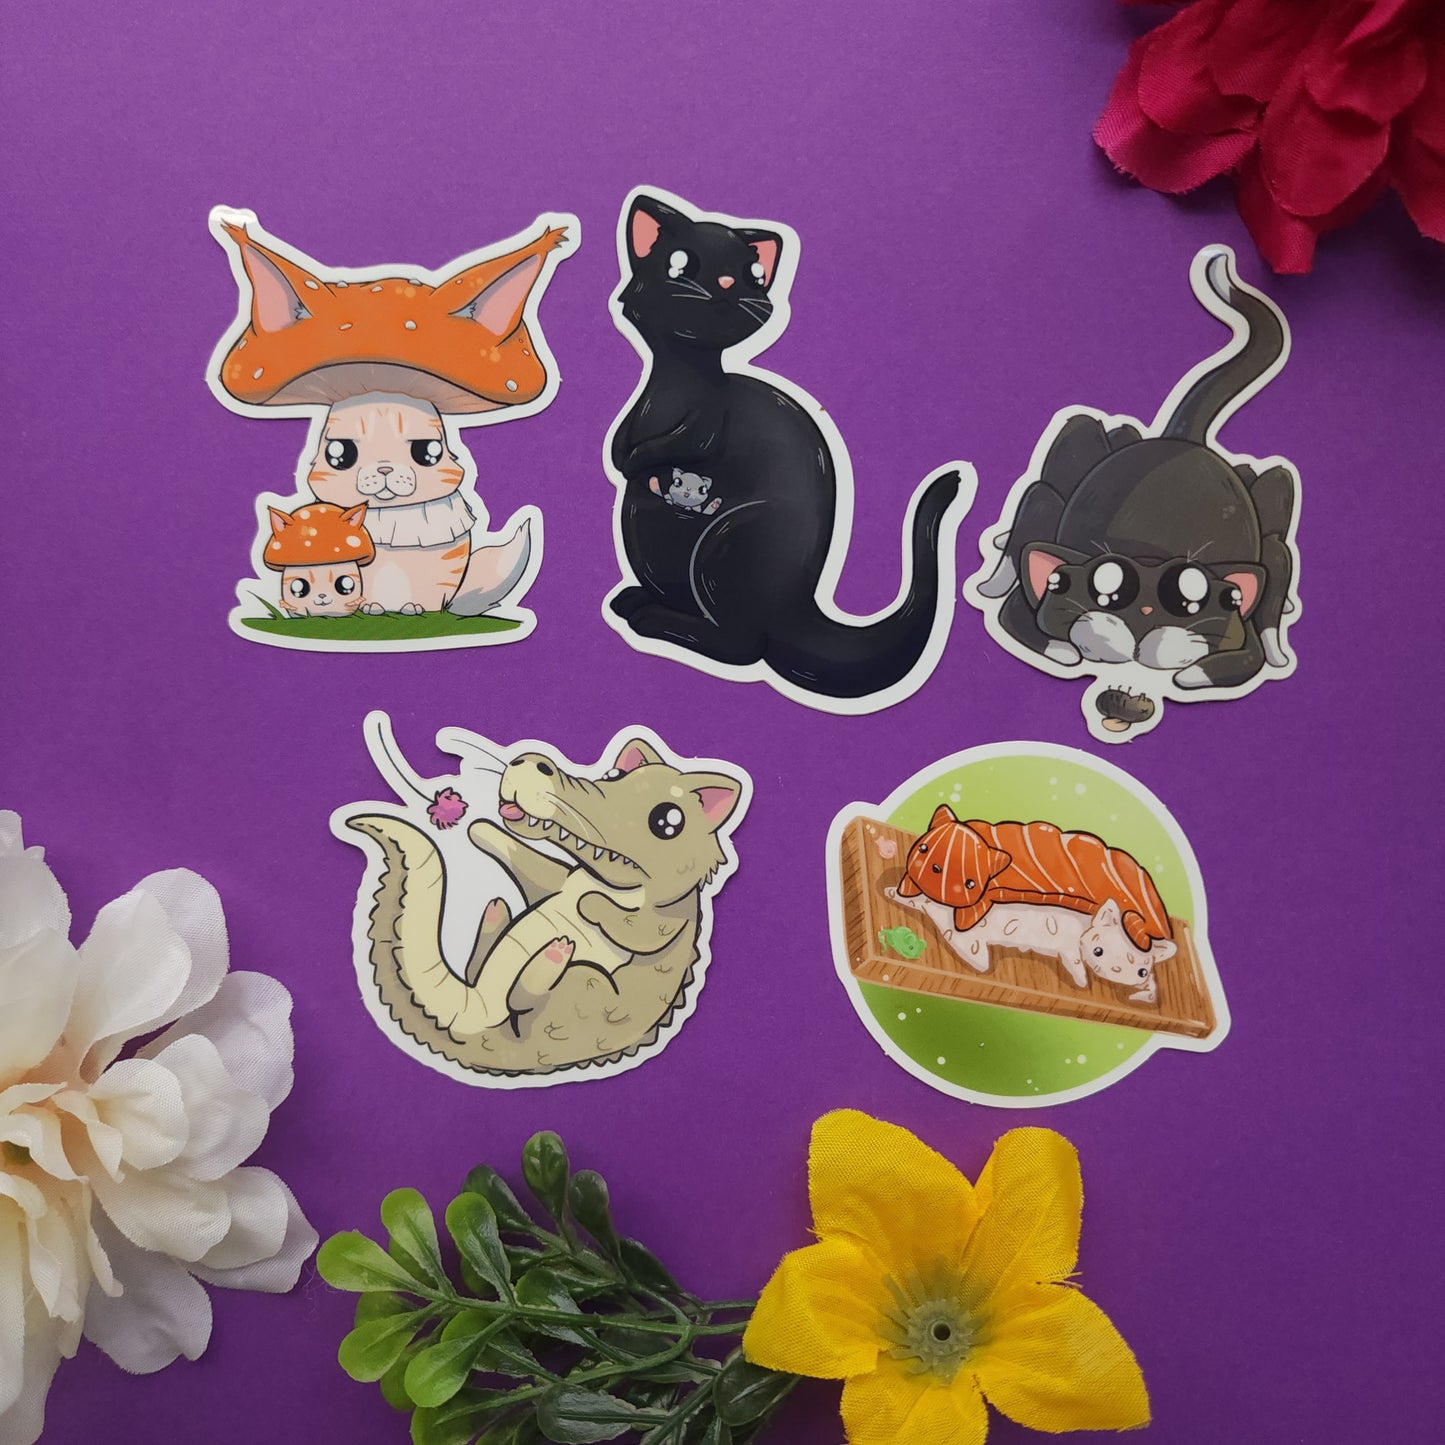 Cataroo Sticker (cat + kangaroo)